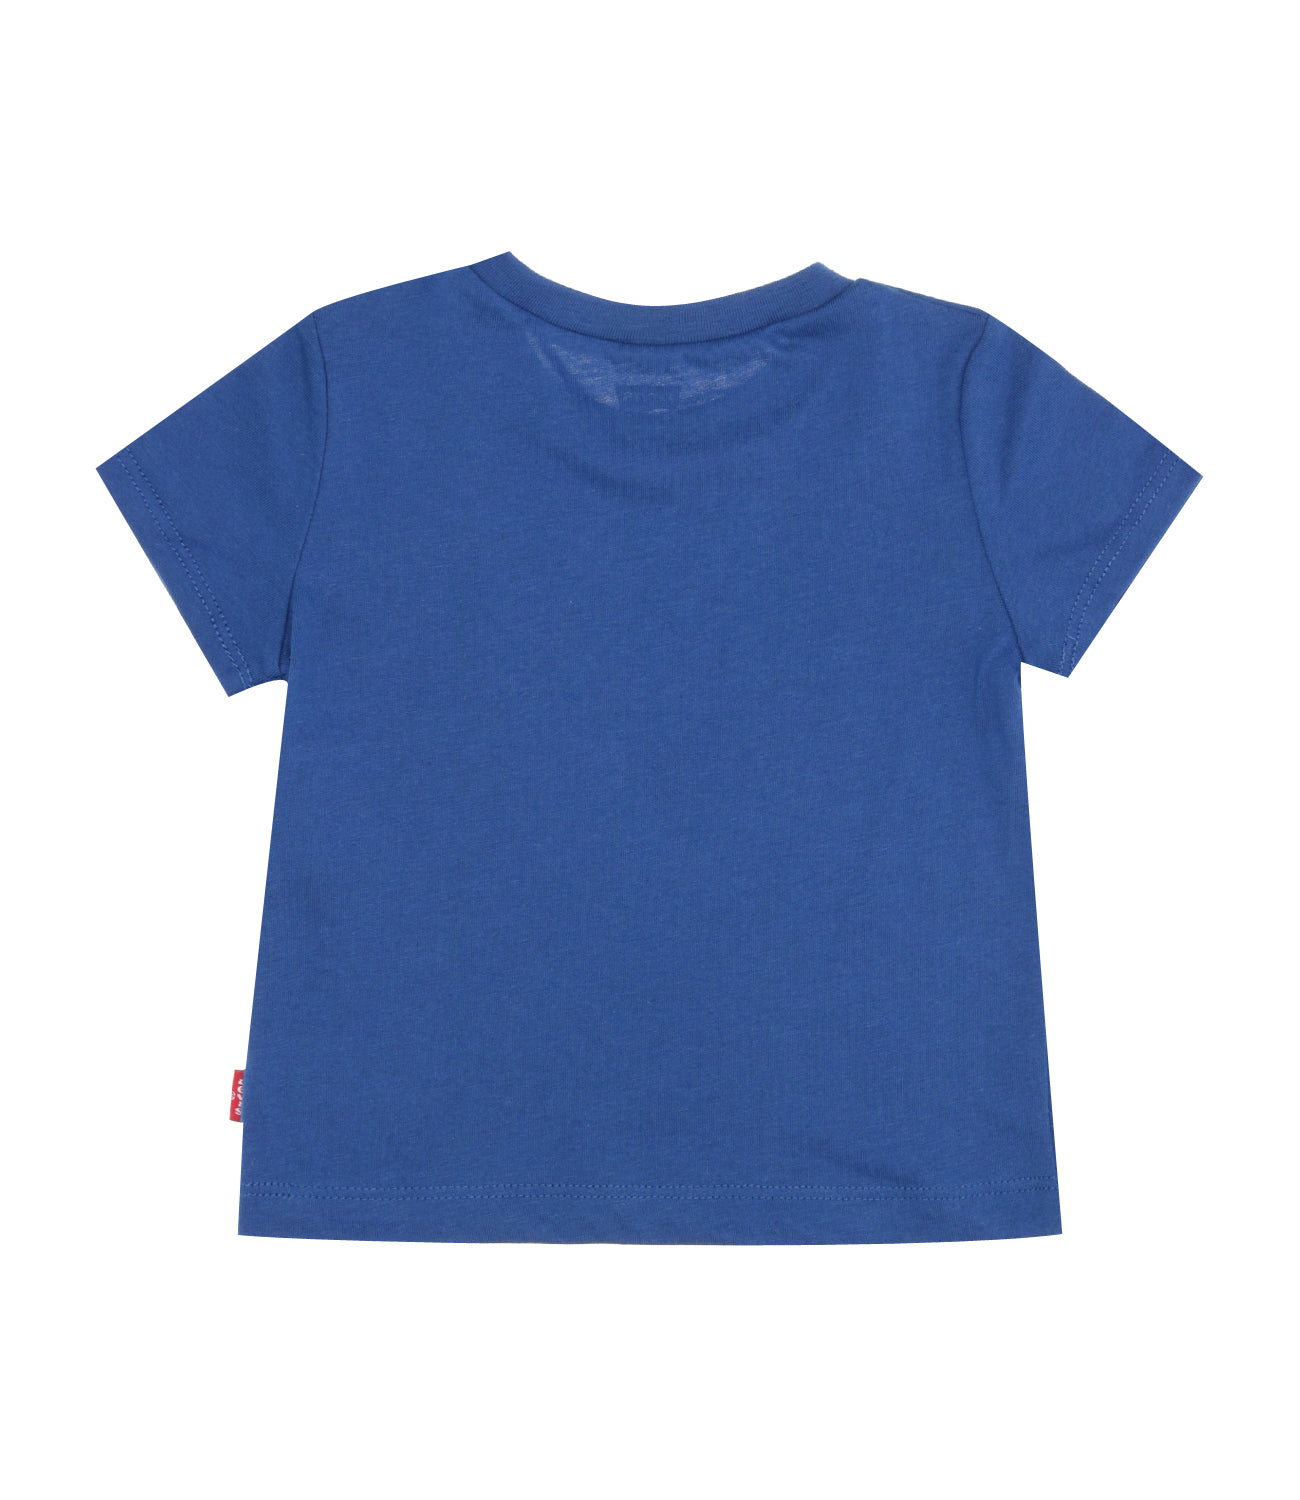 Levis Kids | T-Shirt Blu navy